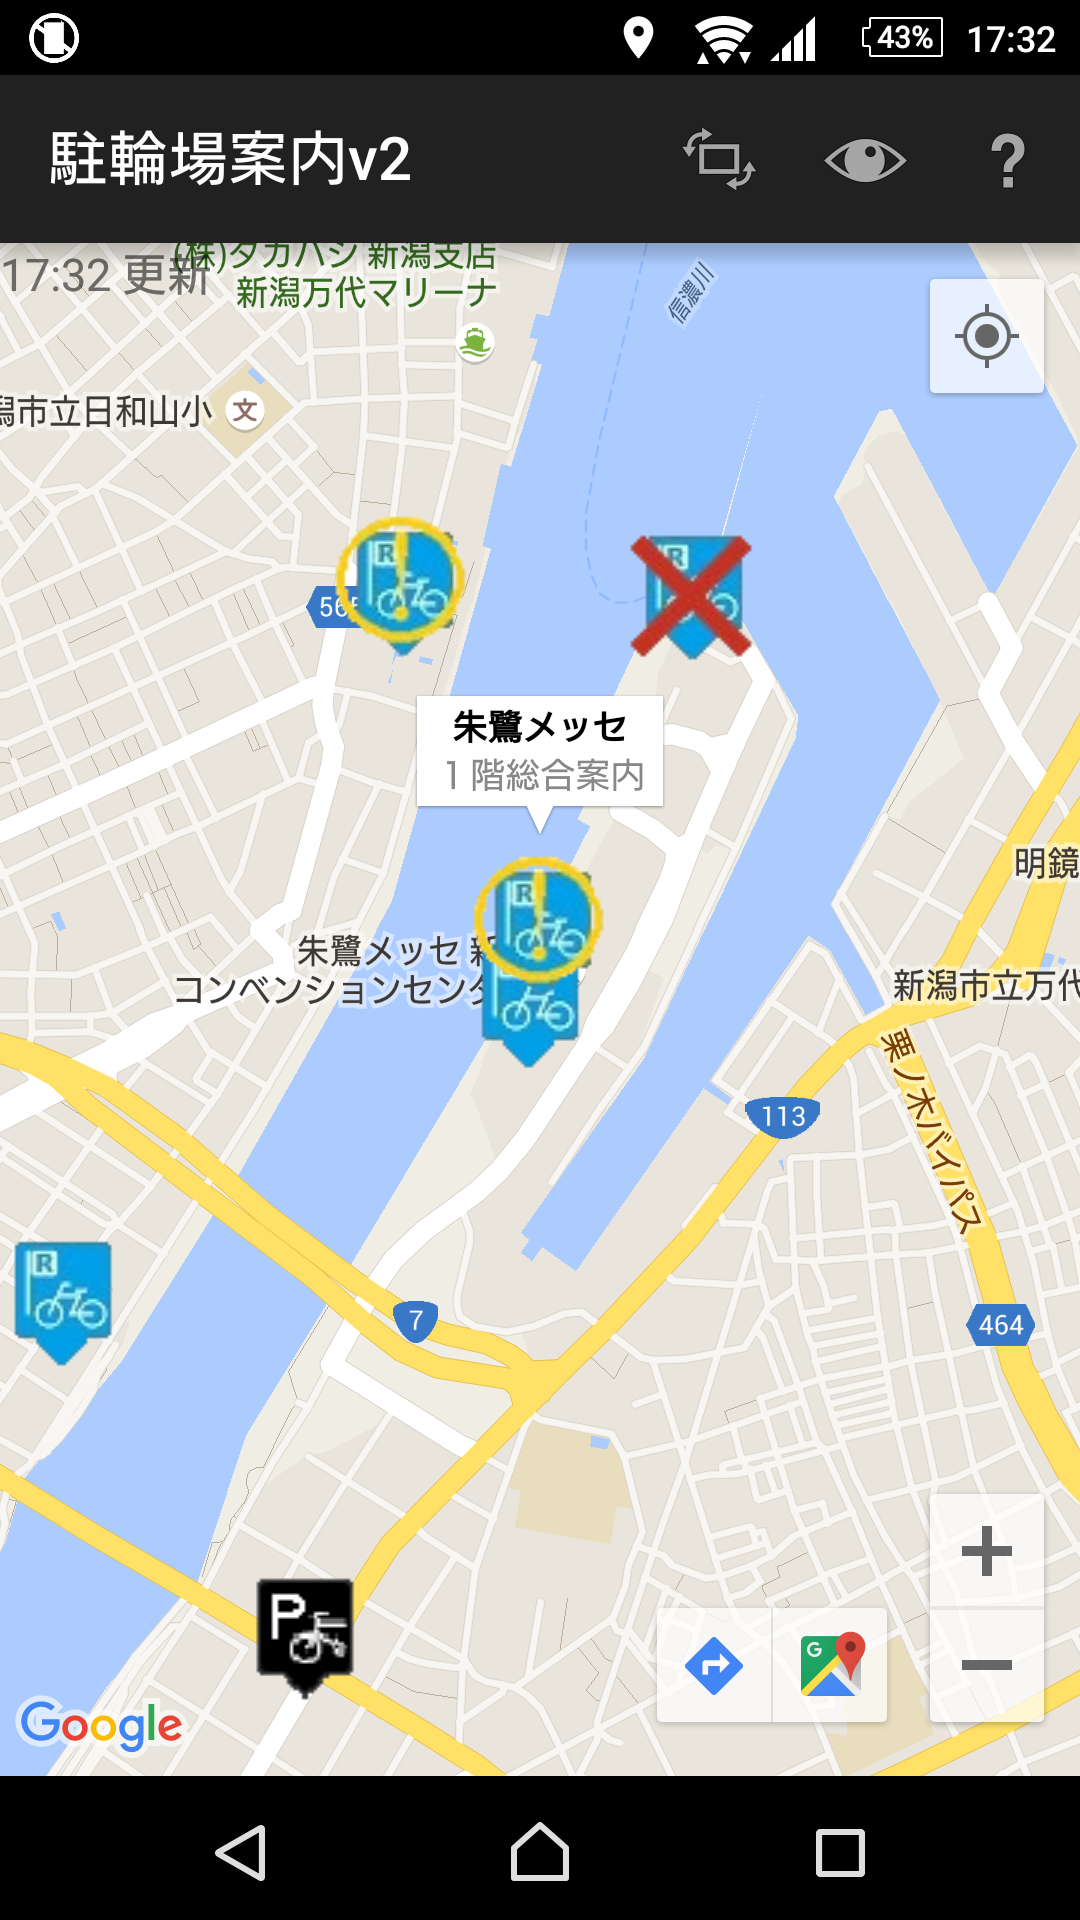 Android application BPG v2 ~ Niigata ~ screenshort